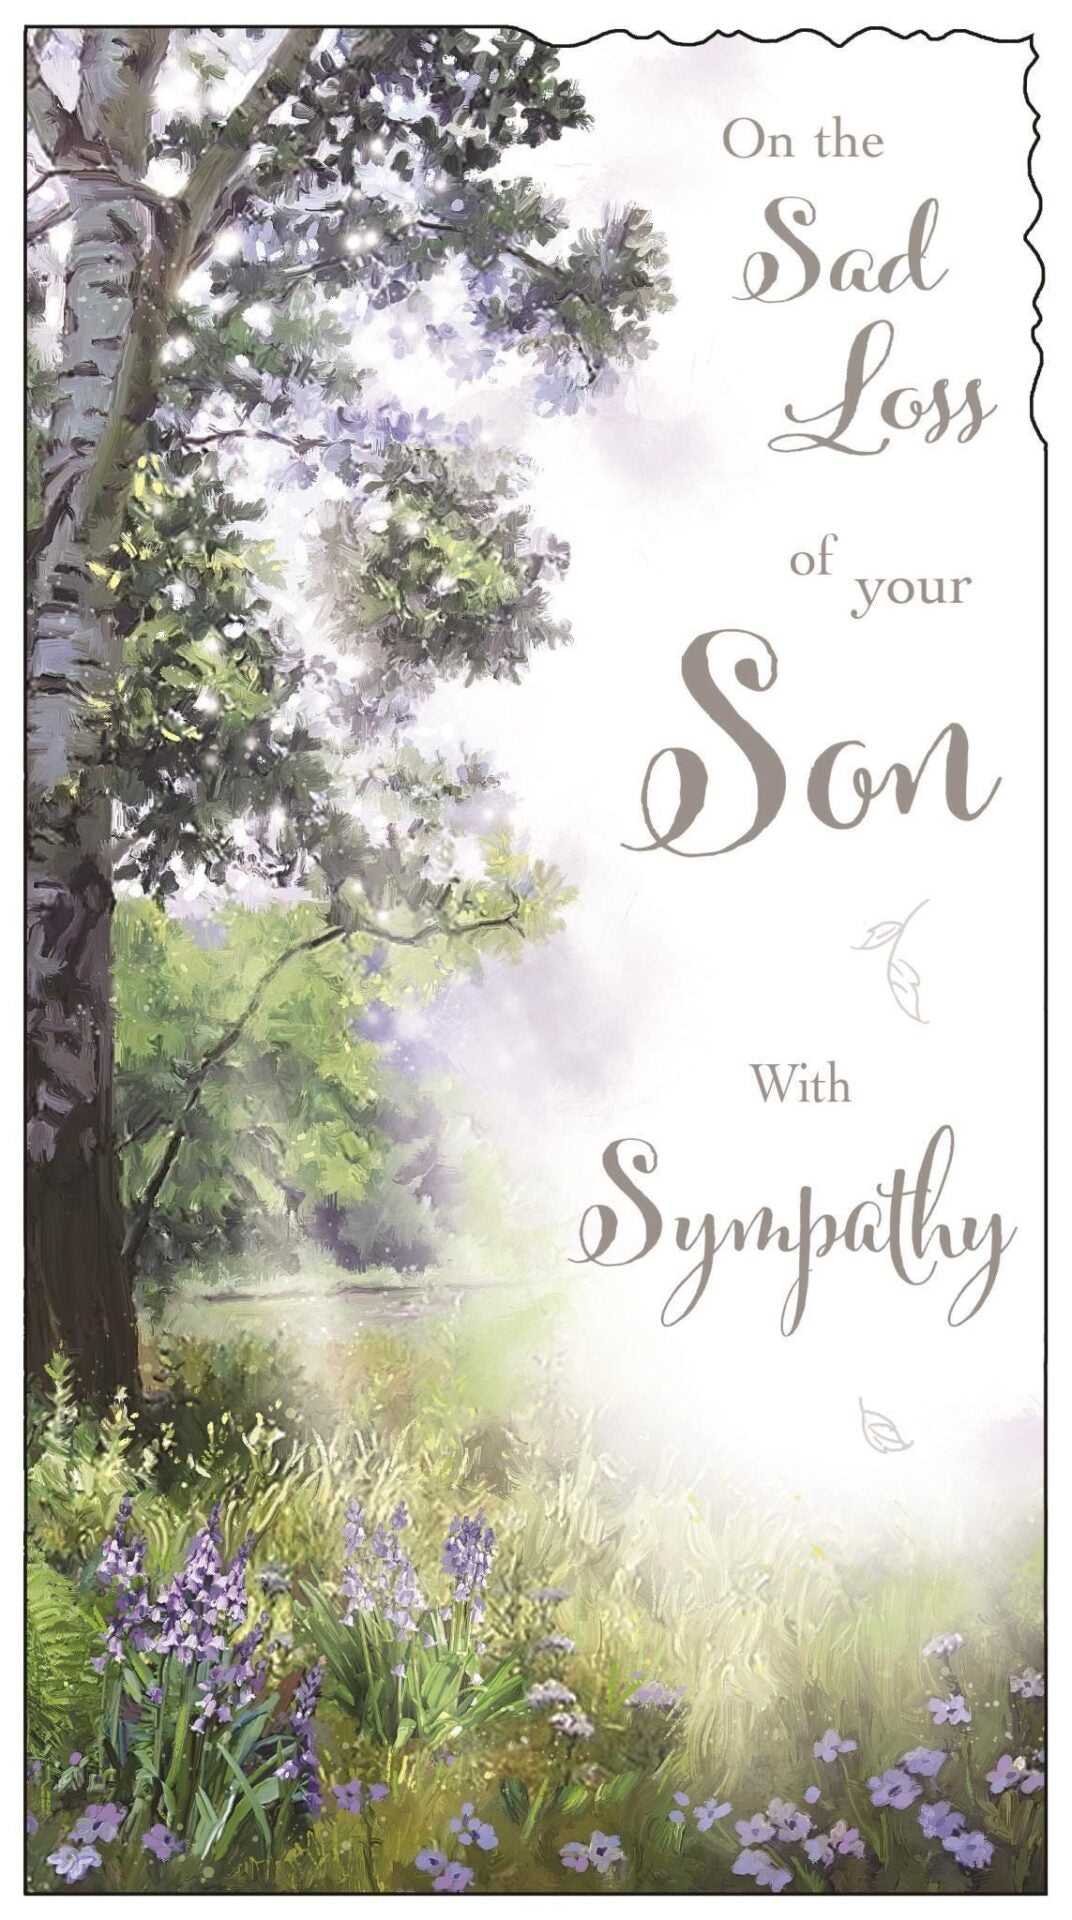 Son Sympathy Card - The Tree The Lasting Symbol Of Life